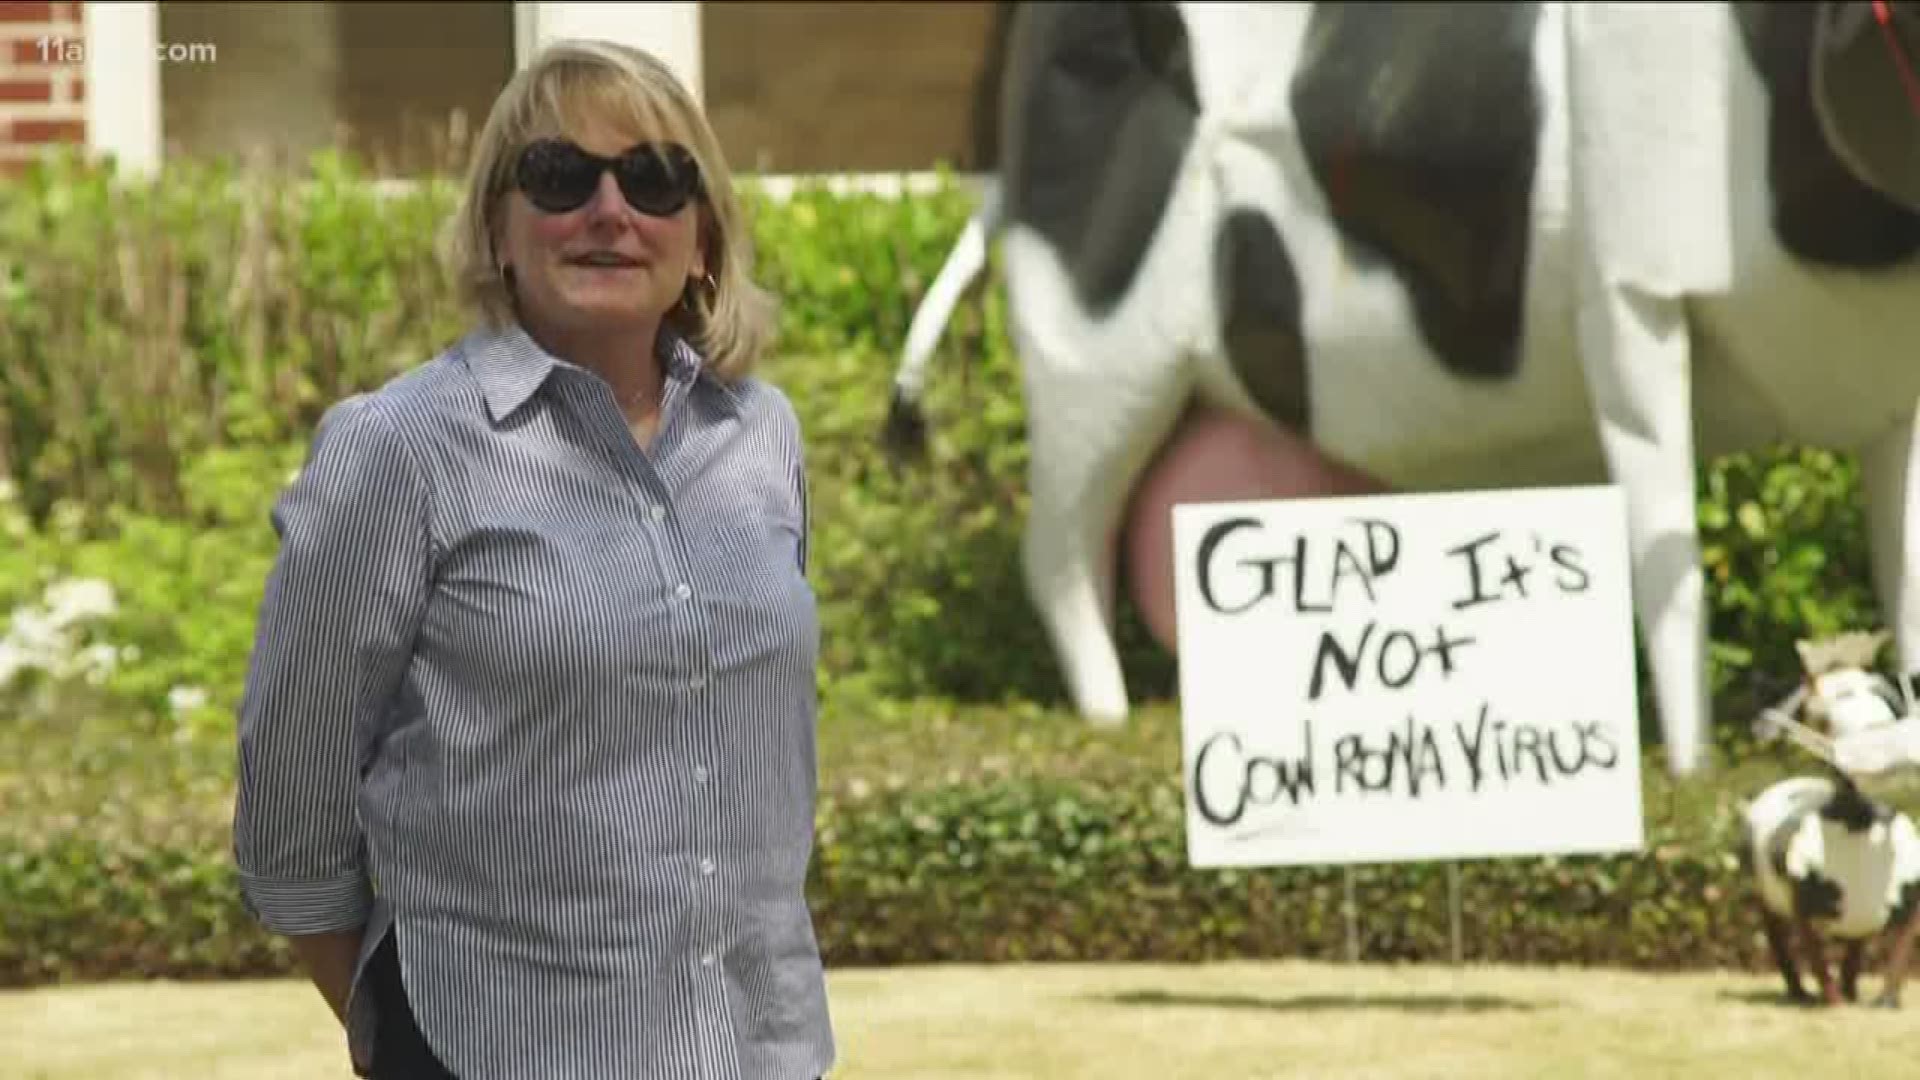 One Atlanta neighborhood is having a “cow” during the coronavirus.